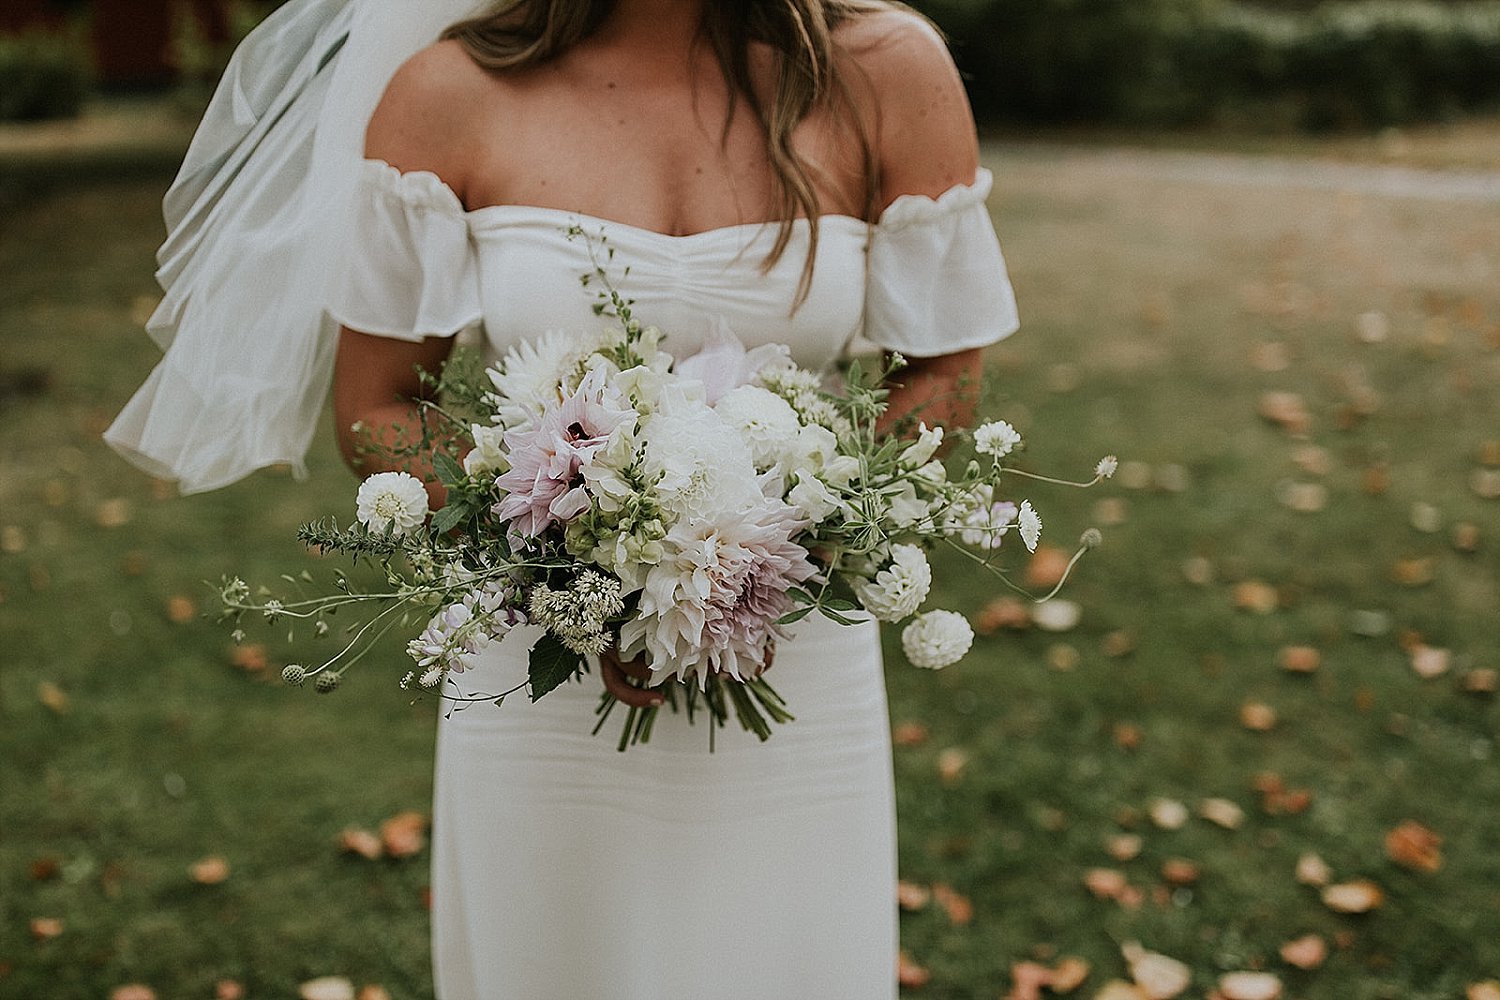 bride in off-the-shoulder dress carrying modern bouquet of fresh flowers | Aero Island | Danish Island Weddings | Full service Denmark wedding planners